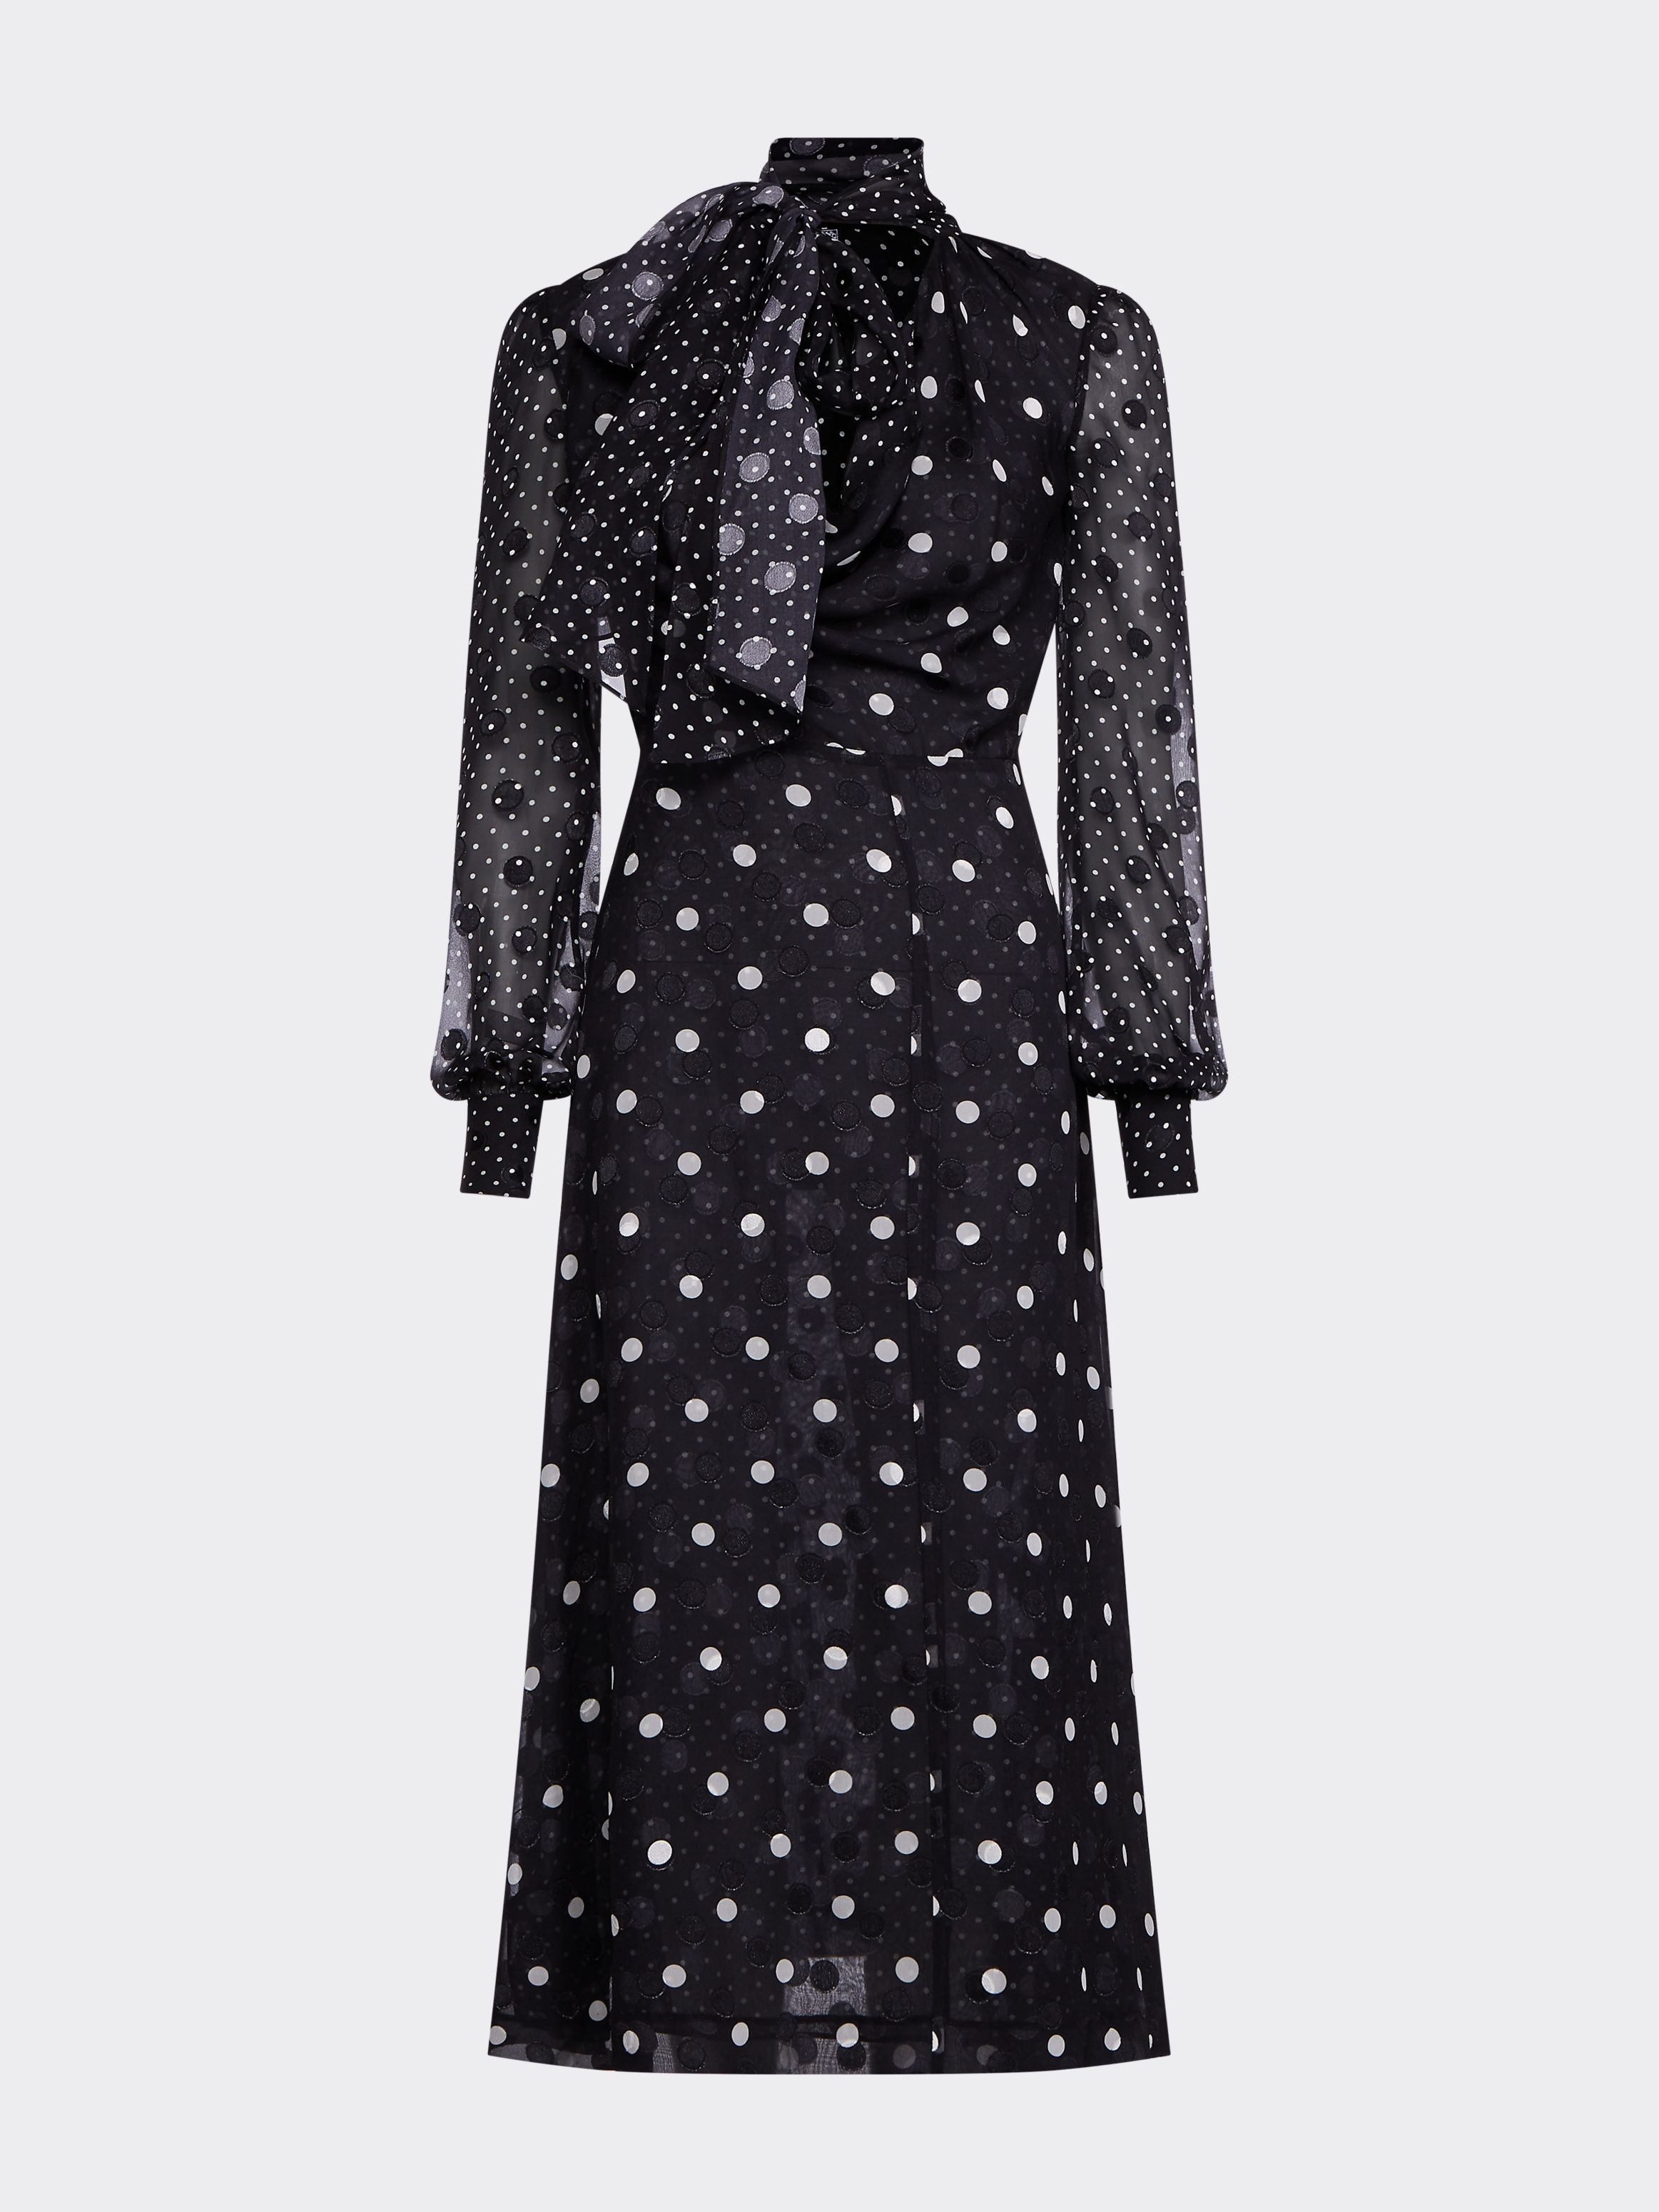 tommy hilfiger black and white polka dot dress